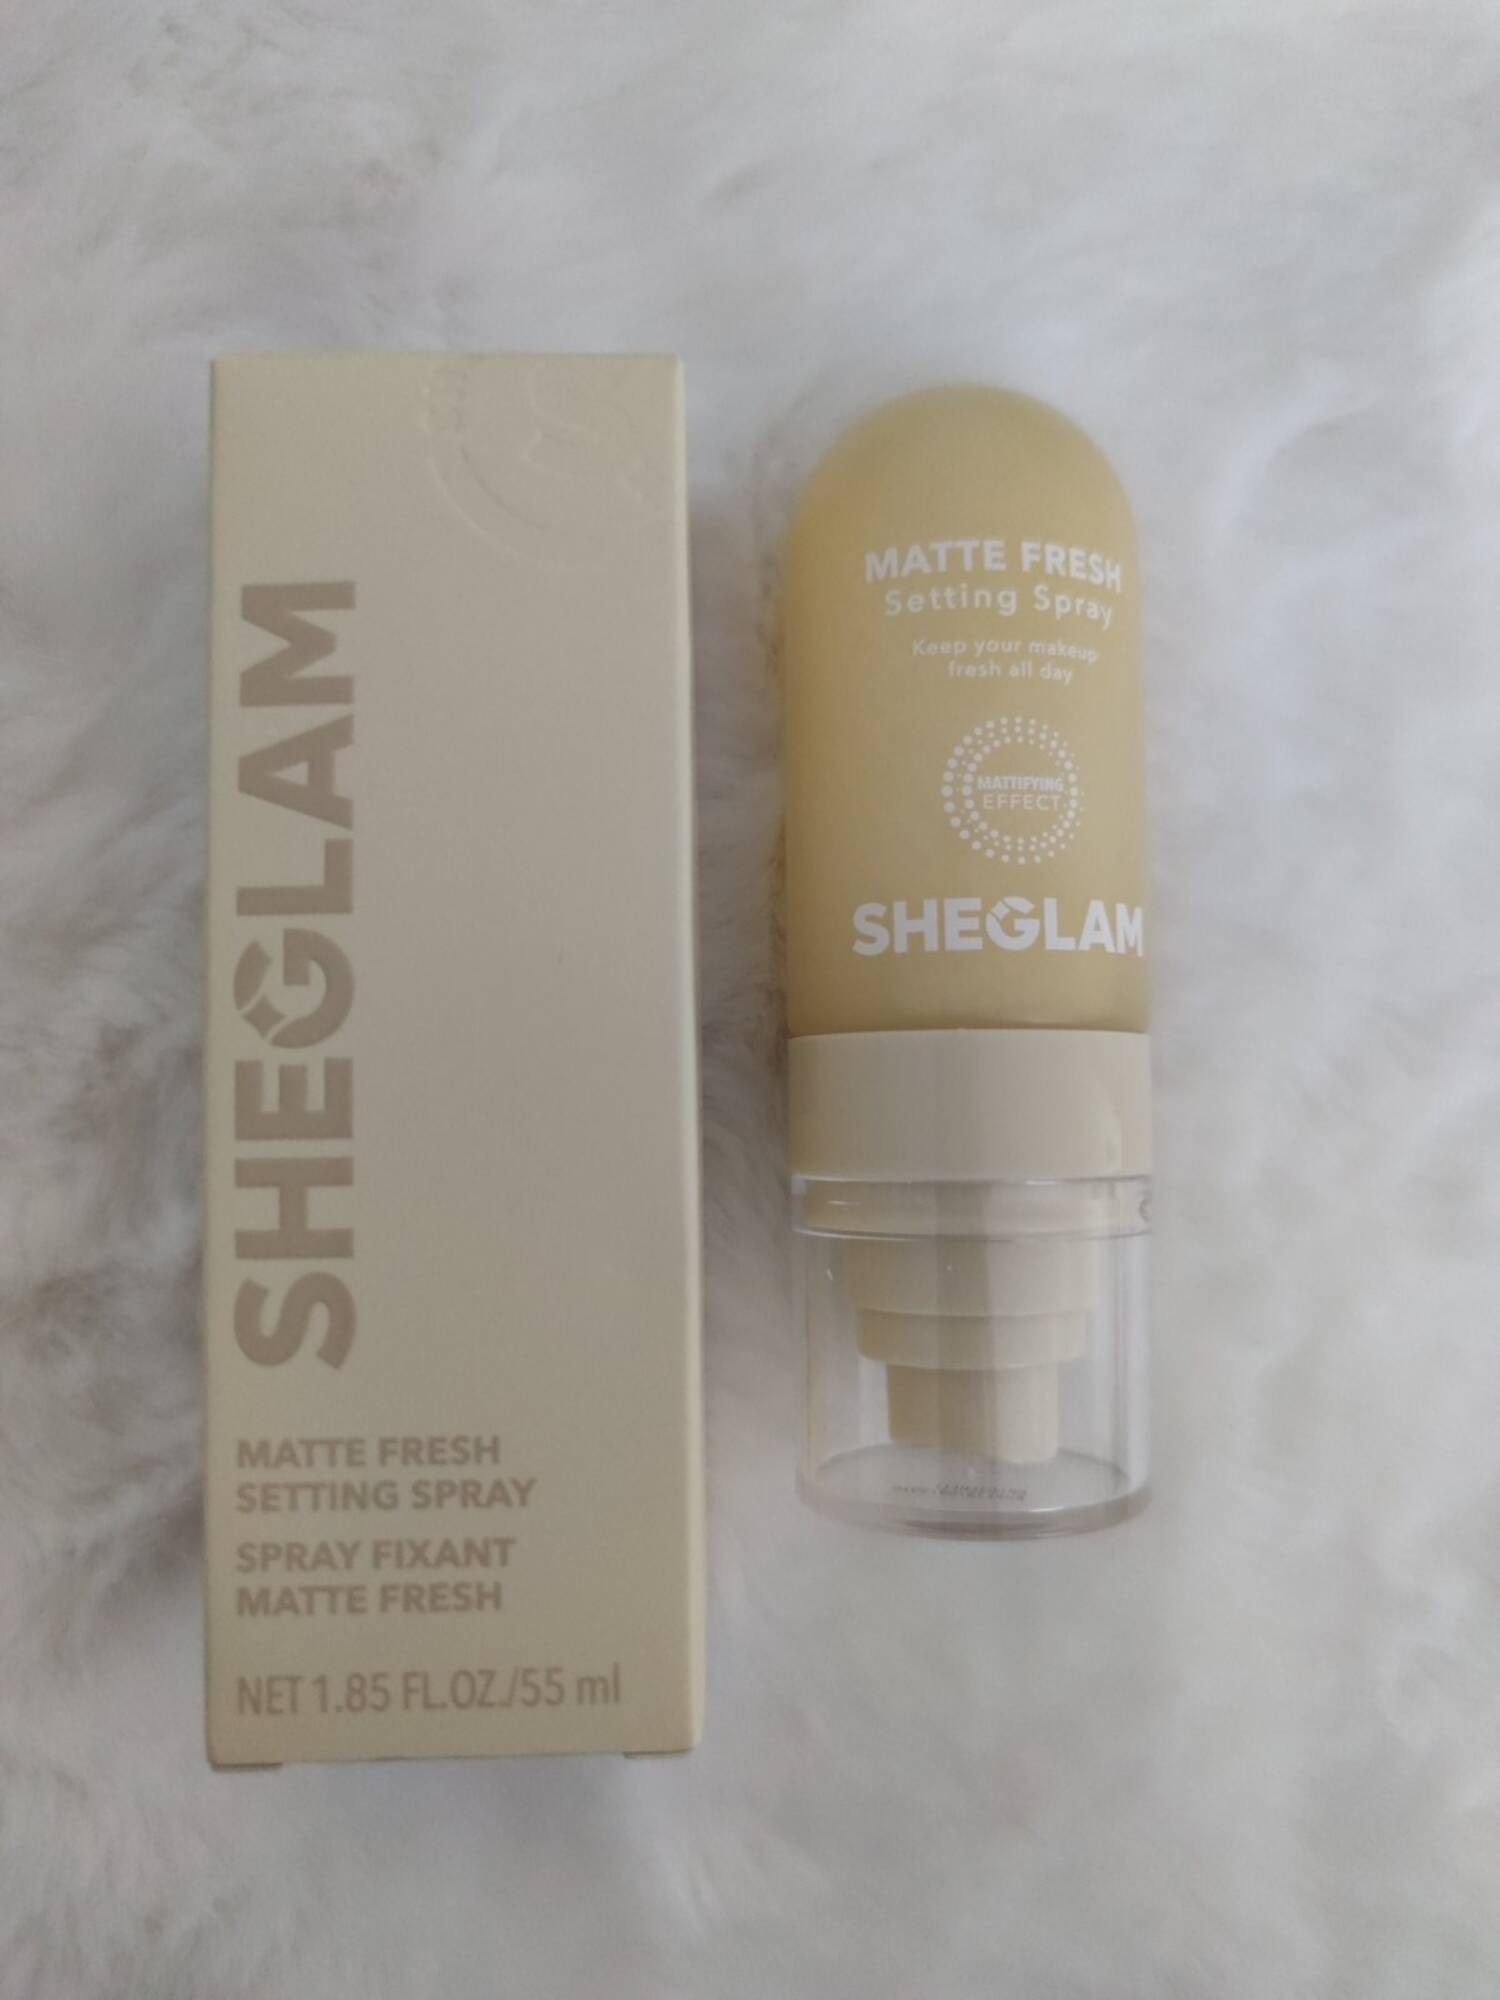 SHEGLAM - Matte fresh setting spray